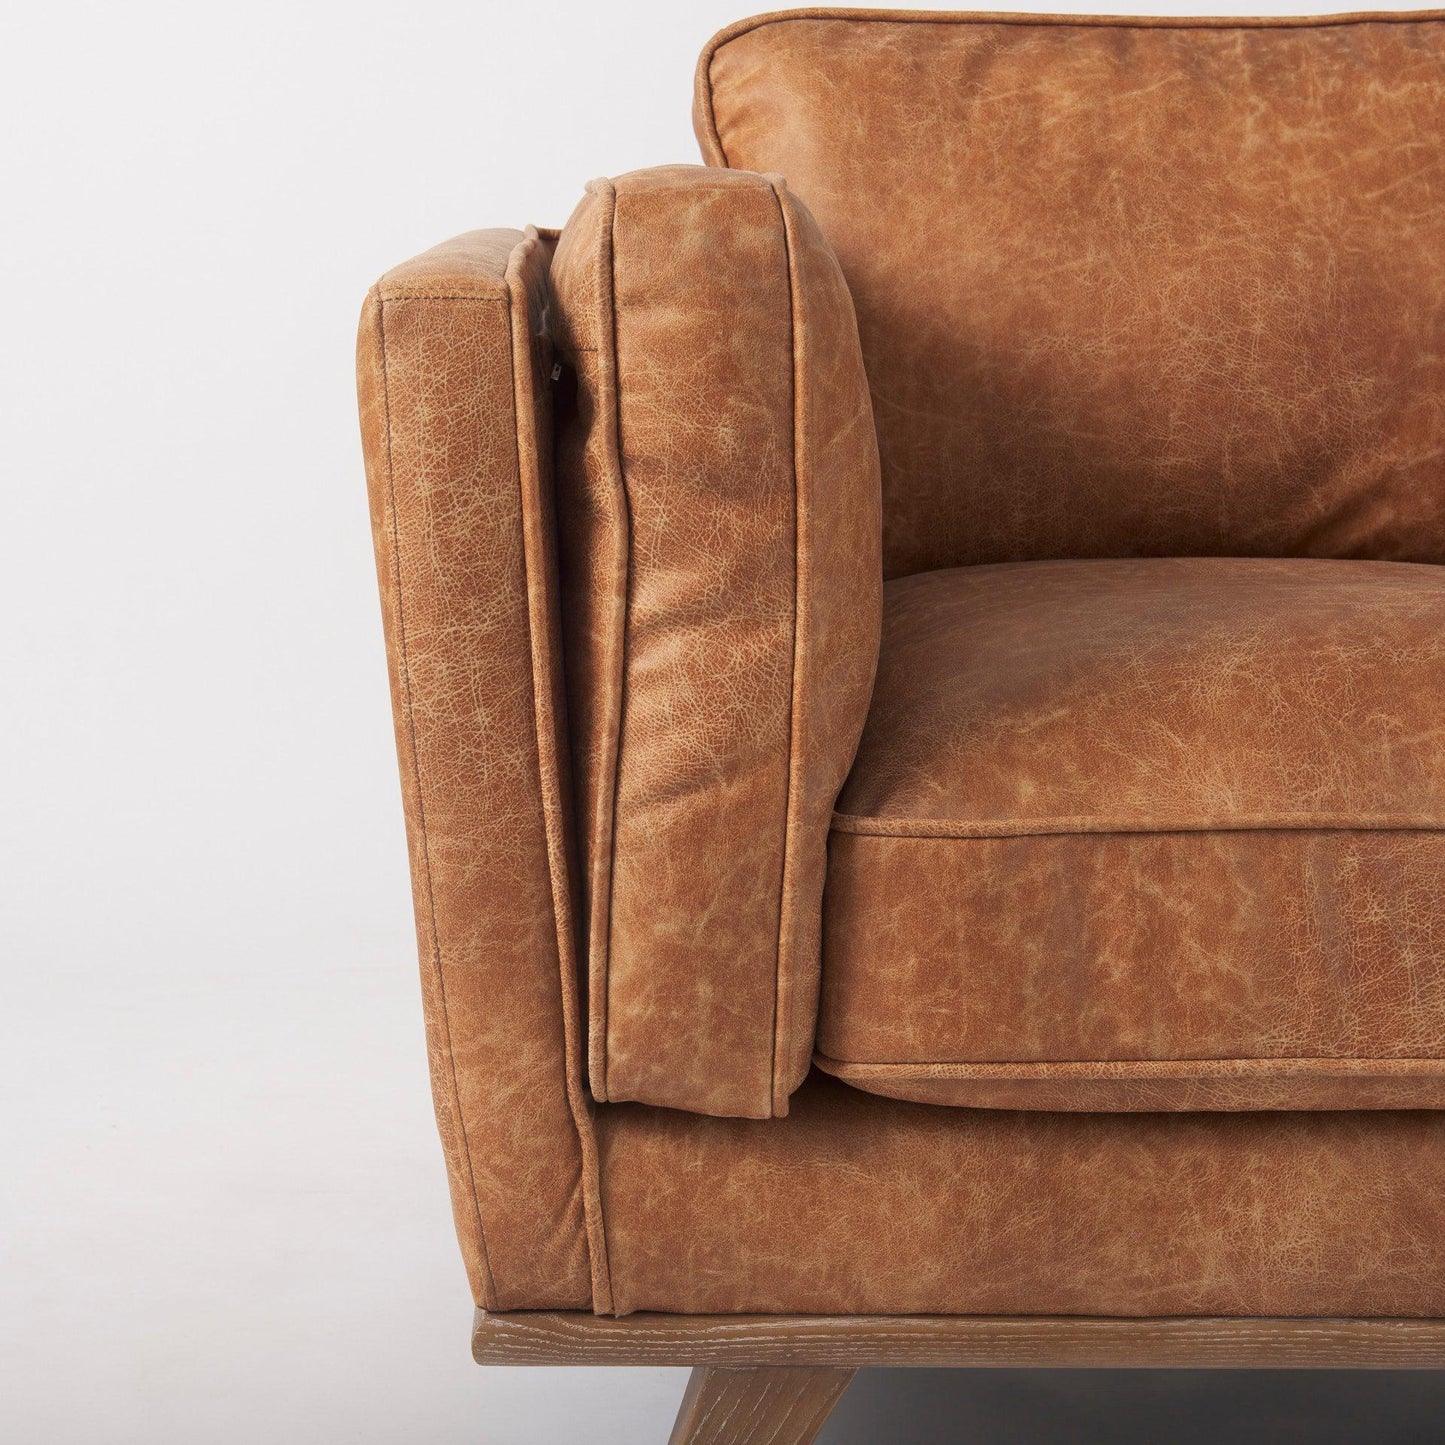 Brooks 41.7L x 34.8W x 33.5H Cognac Brown Faux Leather Chair W/ Medium Brown Wooden Legs